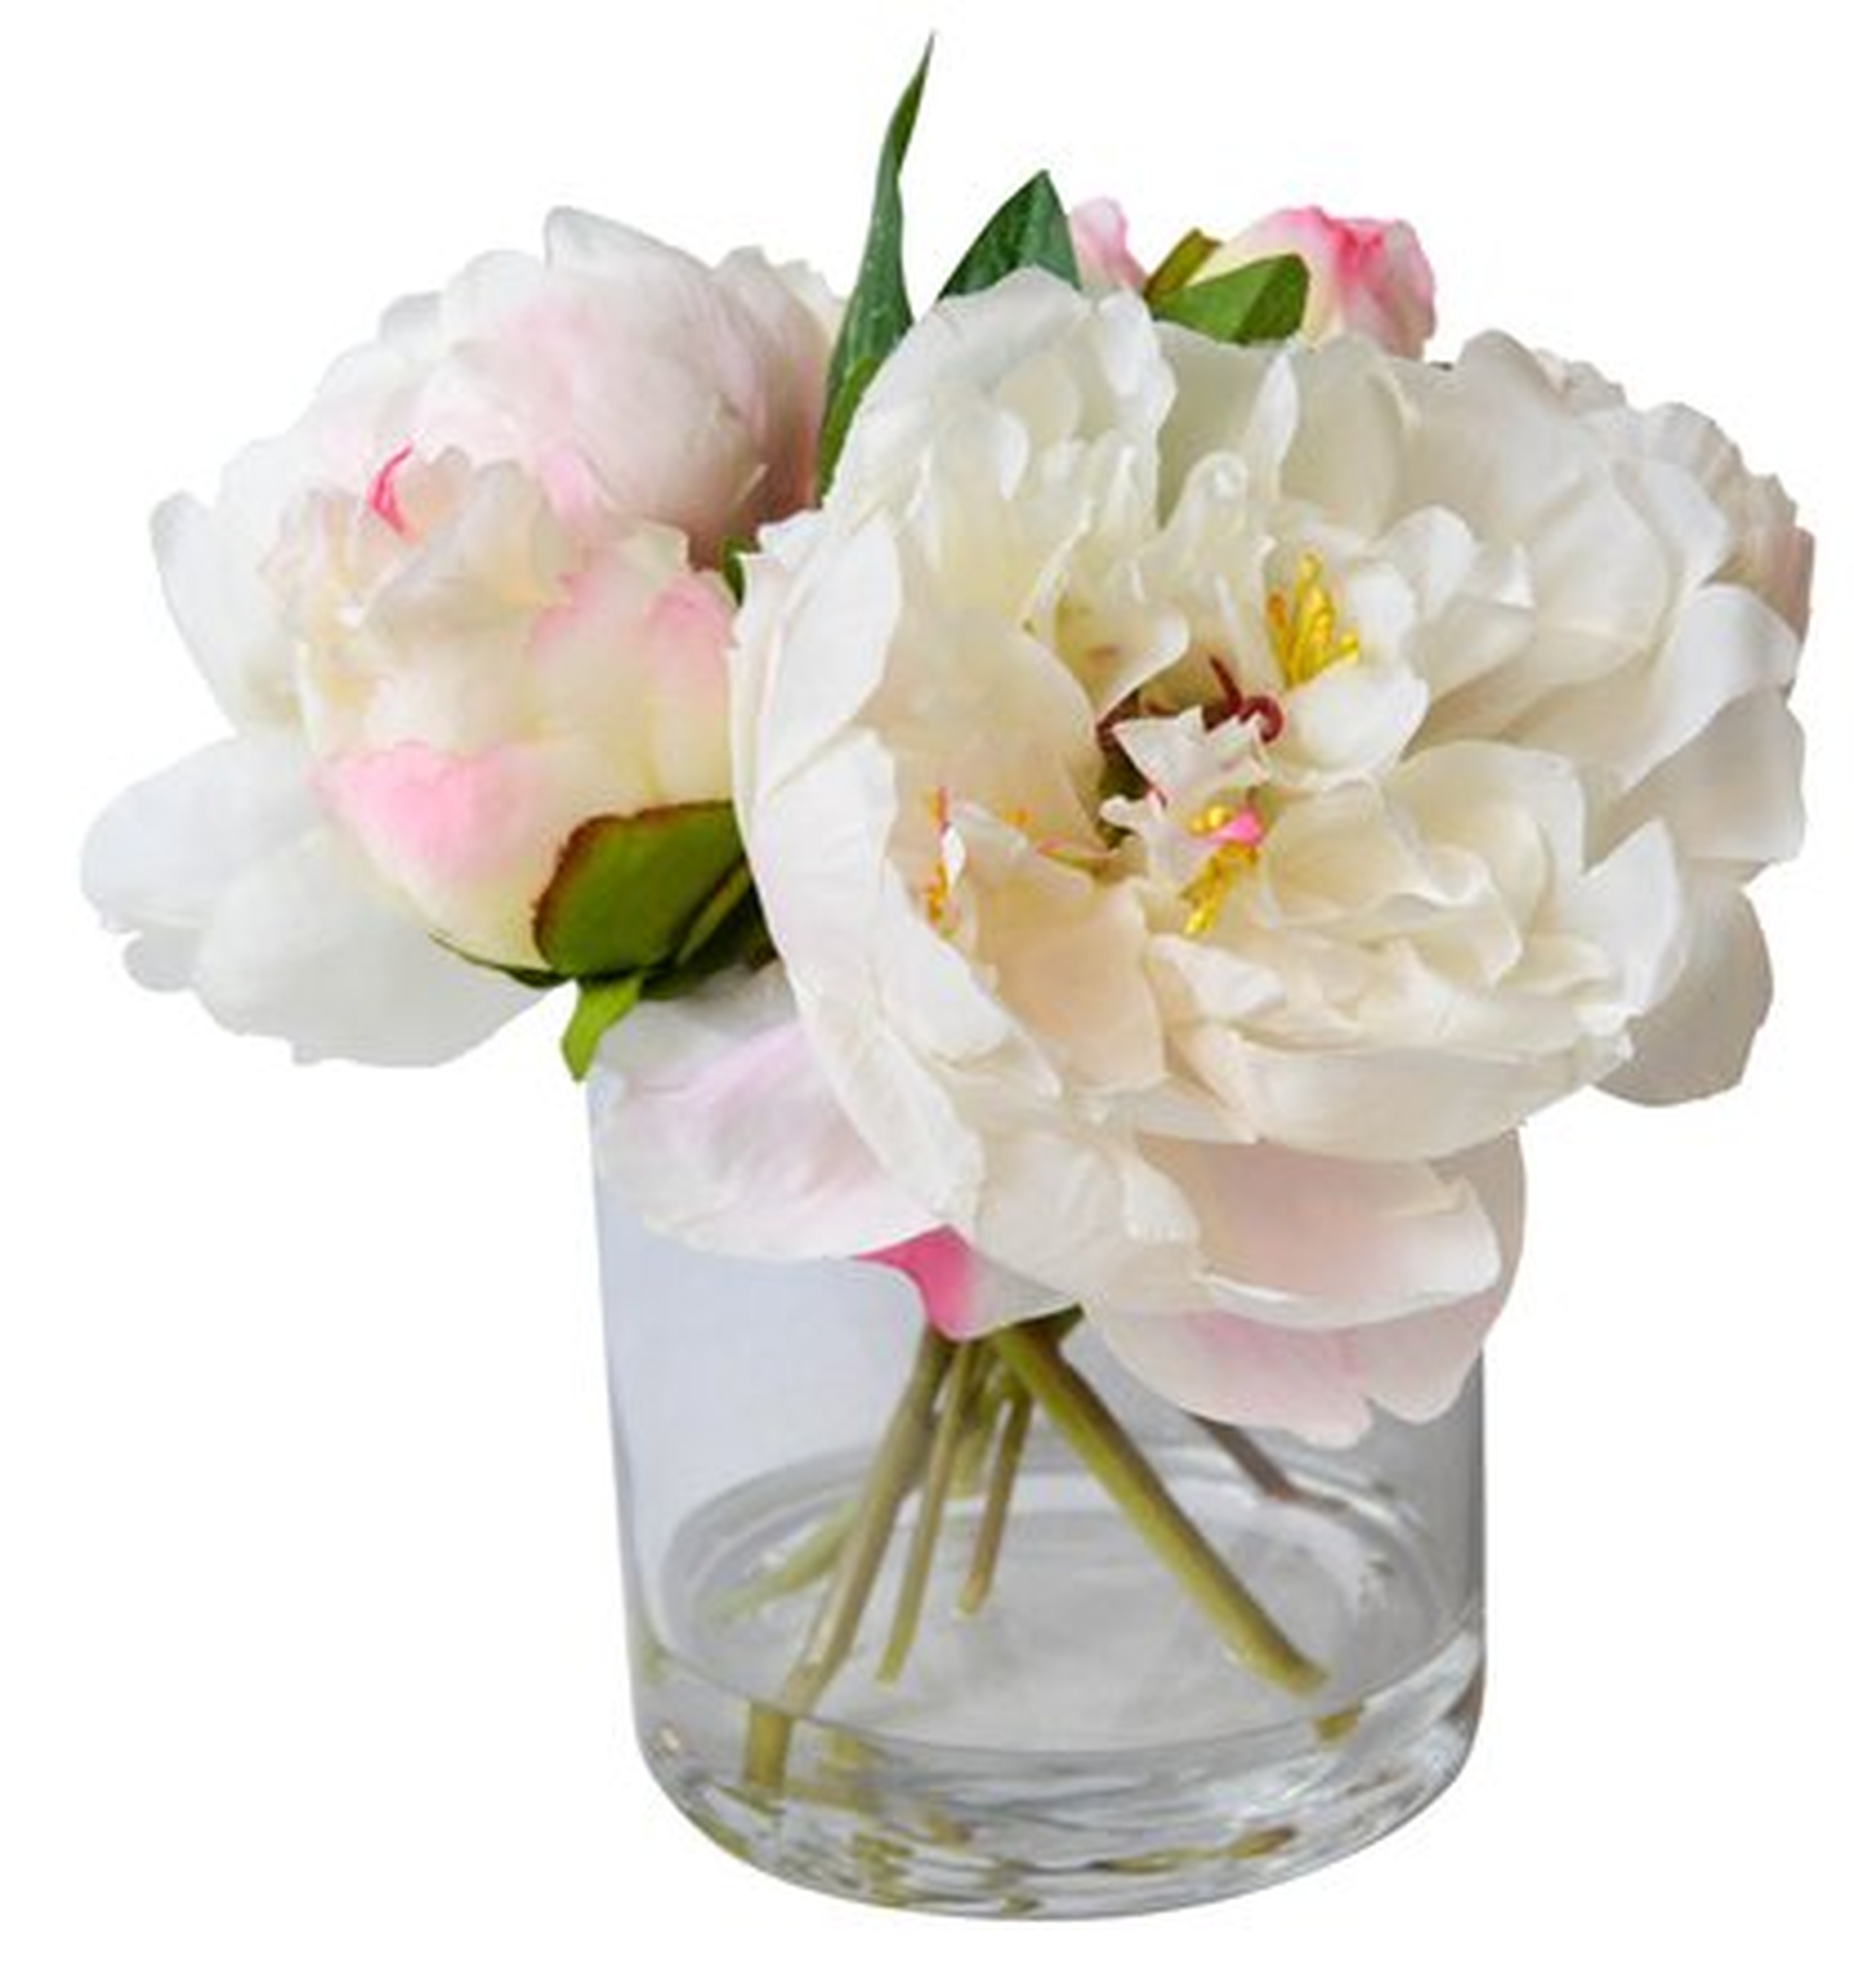 Fresh Cut Peony Floral Arrangements in Jar Flower Color: Cream - Perigold